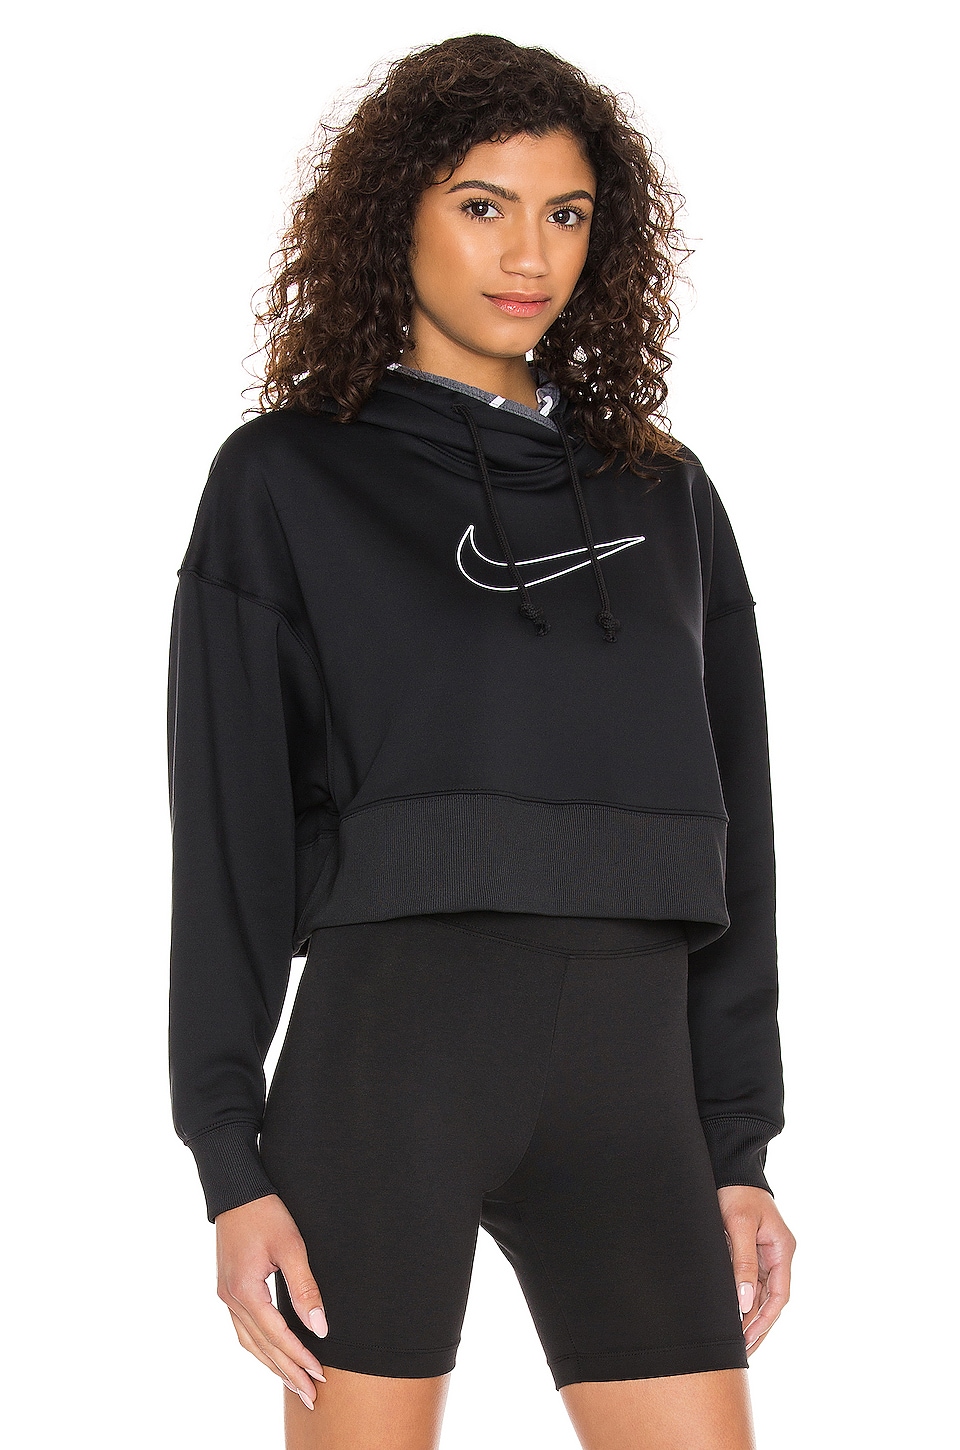 Nike Thermal Crop Sweatshirt in Black & White | REVOLVE